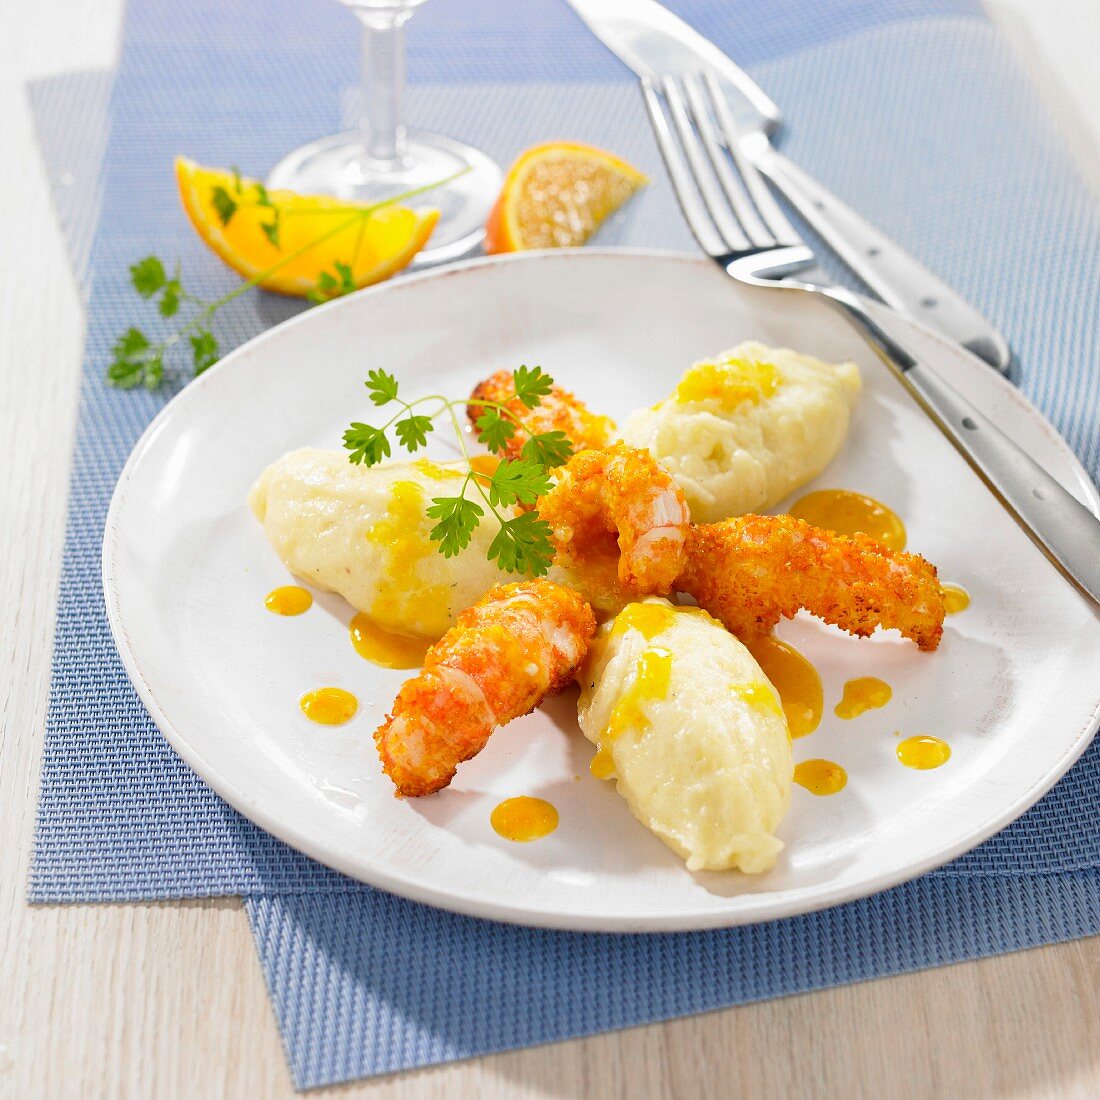 Crispy orange-flavored Dublin Bay prawns,mashed potato quenelles